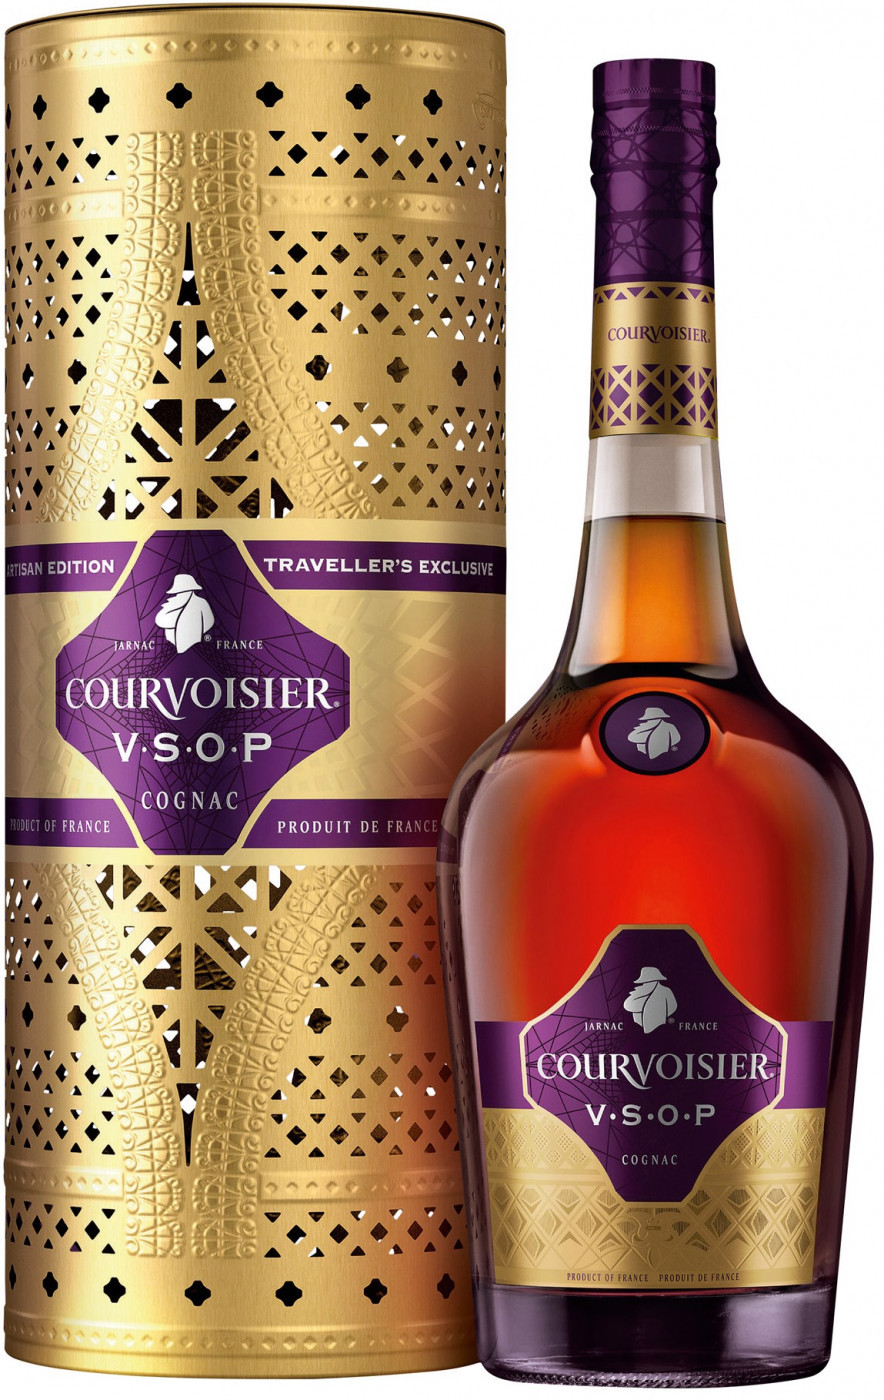 Courvoisier cognac. Курвуазье 0,7 л ВСОП. Courvoisier v.s.o.p./Курвуазье ВСОП 40%. Курвуазье коньяк VSOP 0.7. Коньяк Курвуазье ВСОП 0.7.